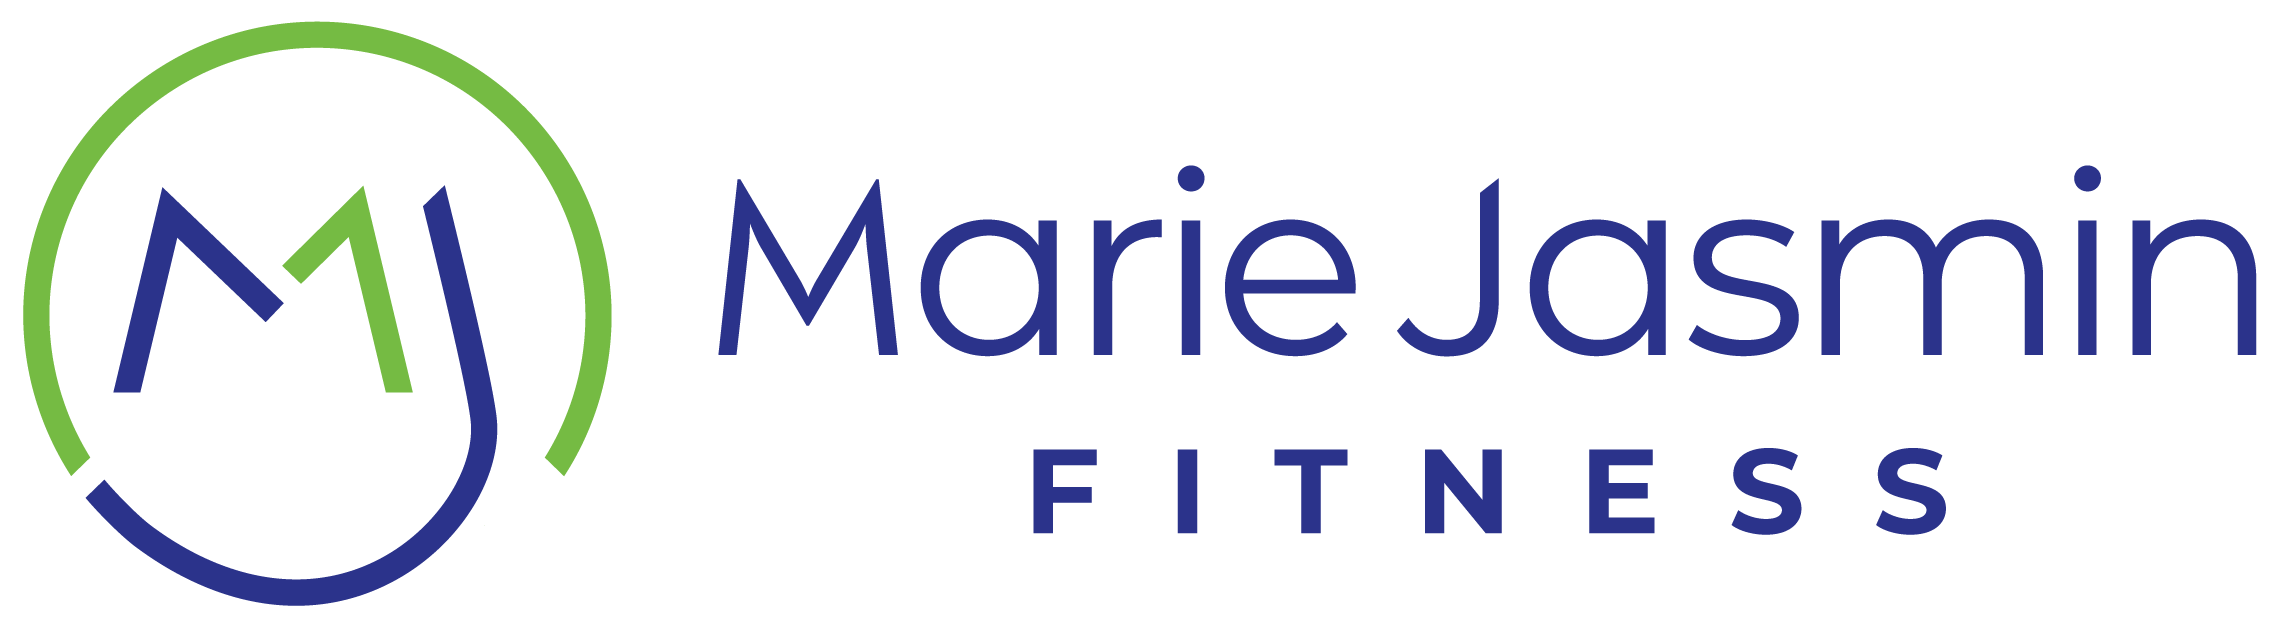 Marie Jasmin Fitness logo.